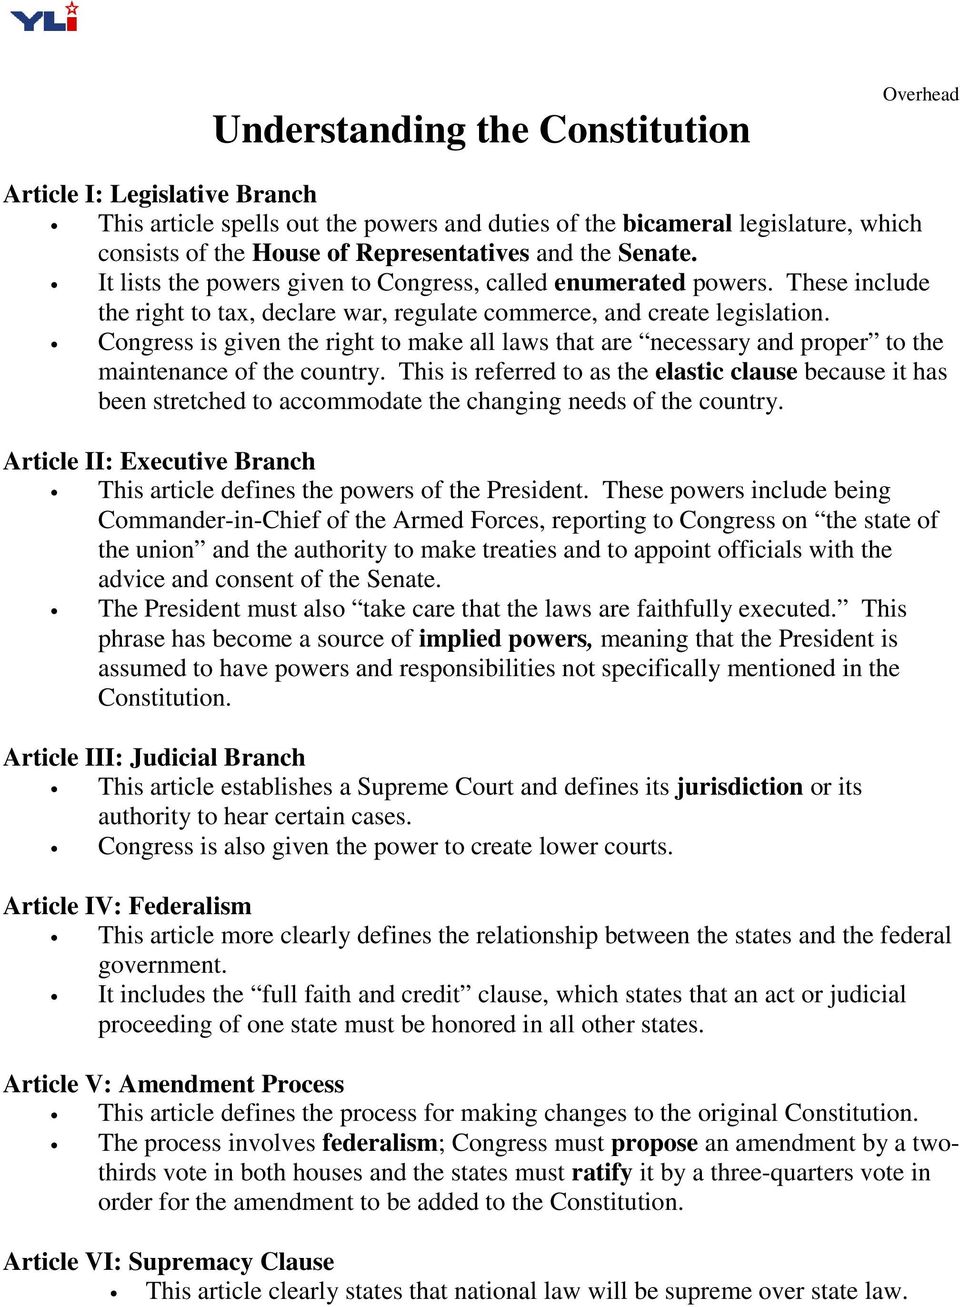 Four Key Constitutional Principles - PDF Free Download In Constitutional Principles Worksheet Answers